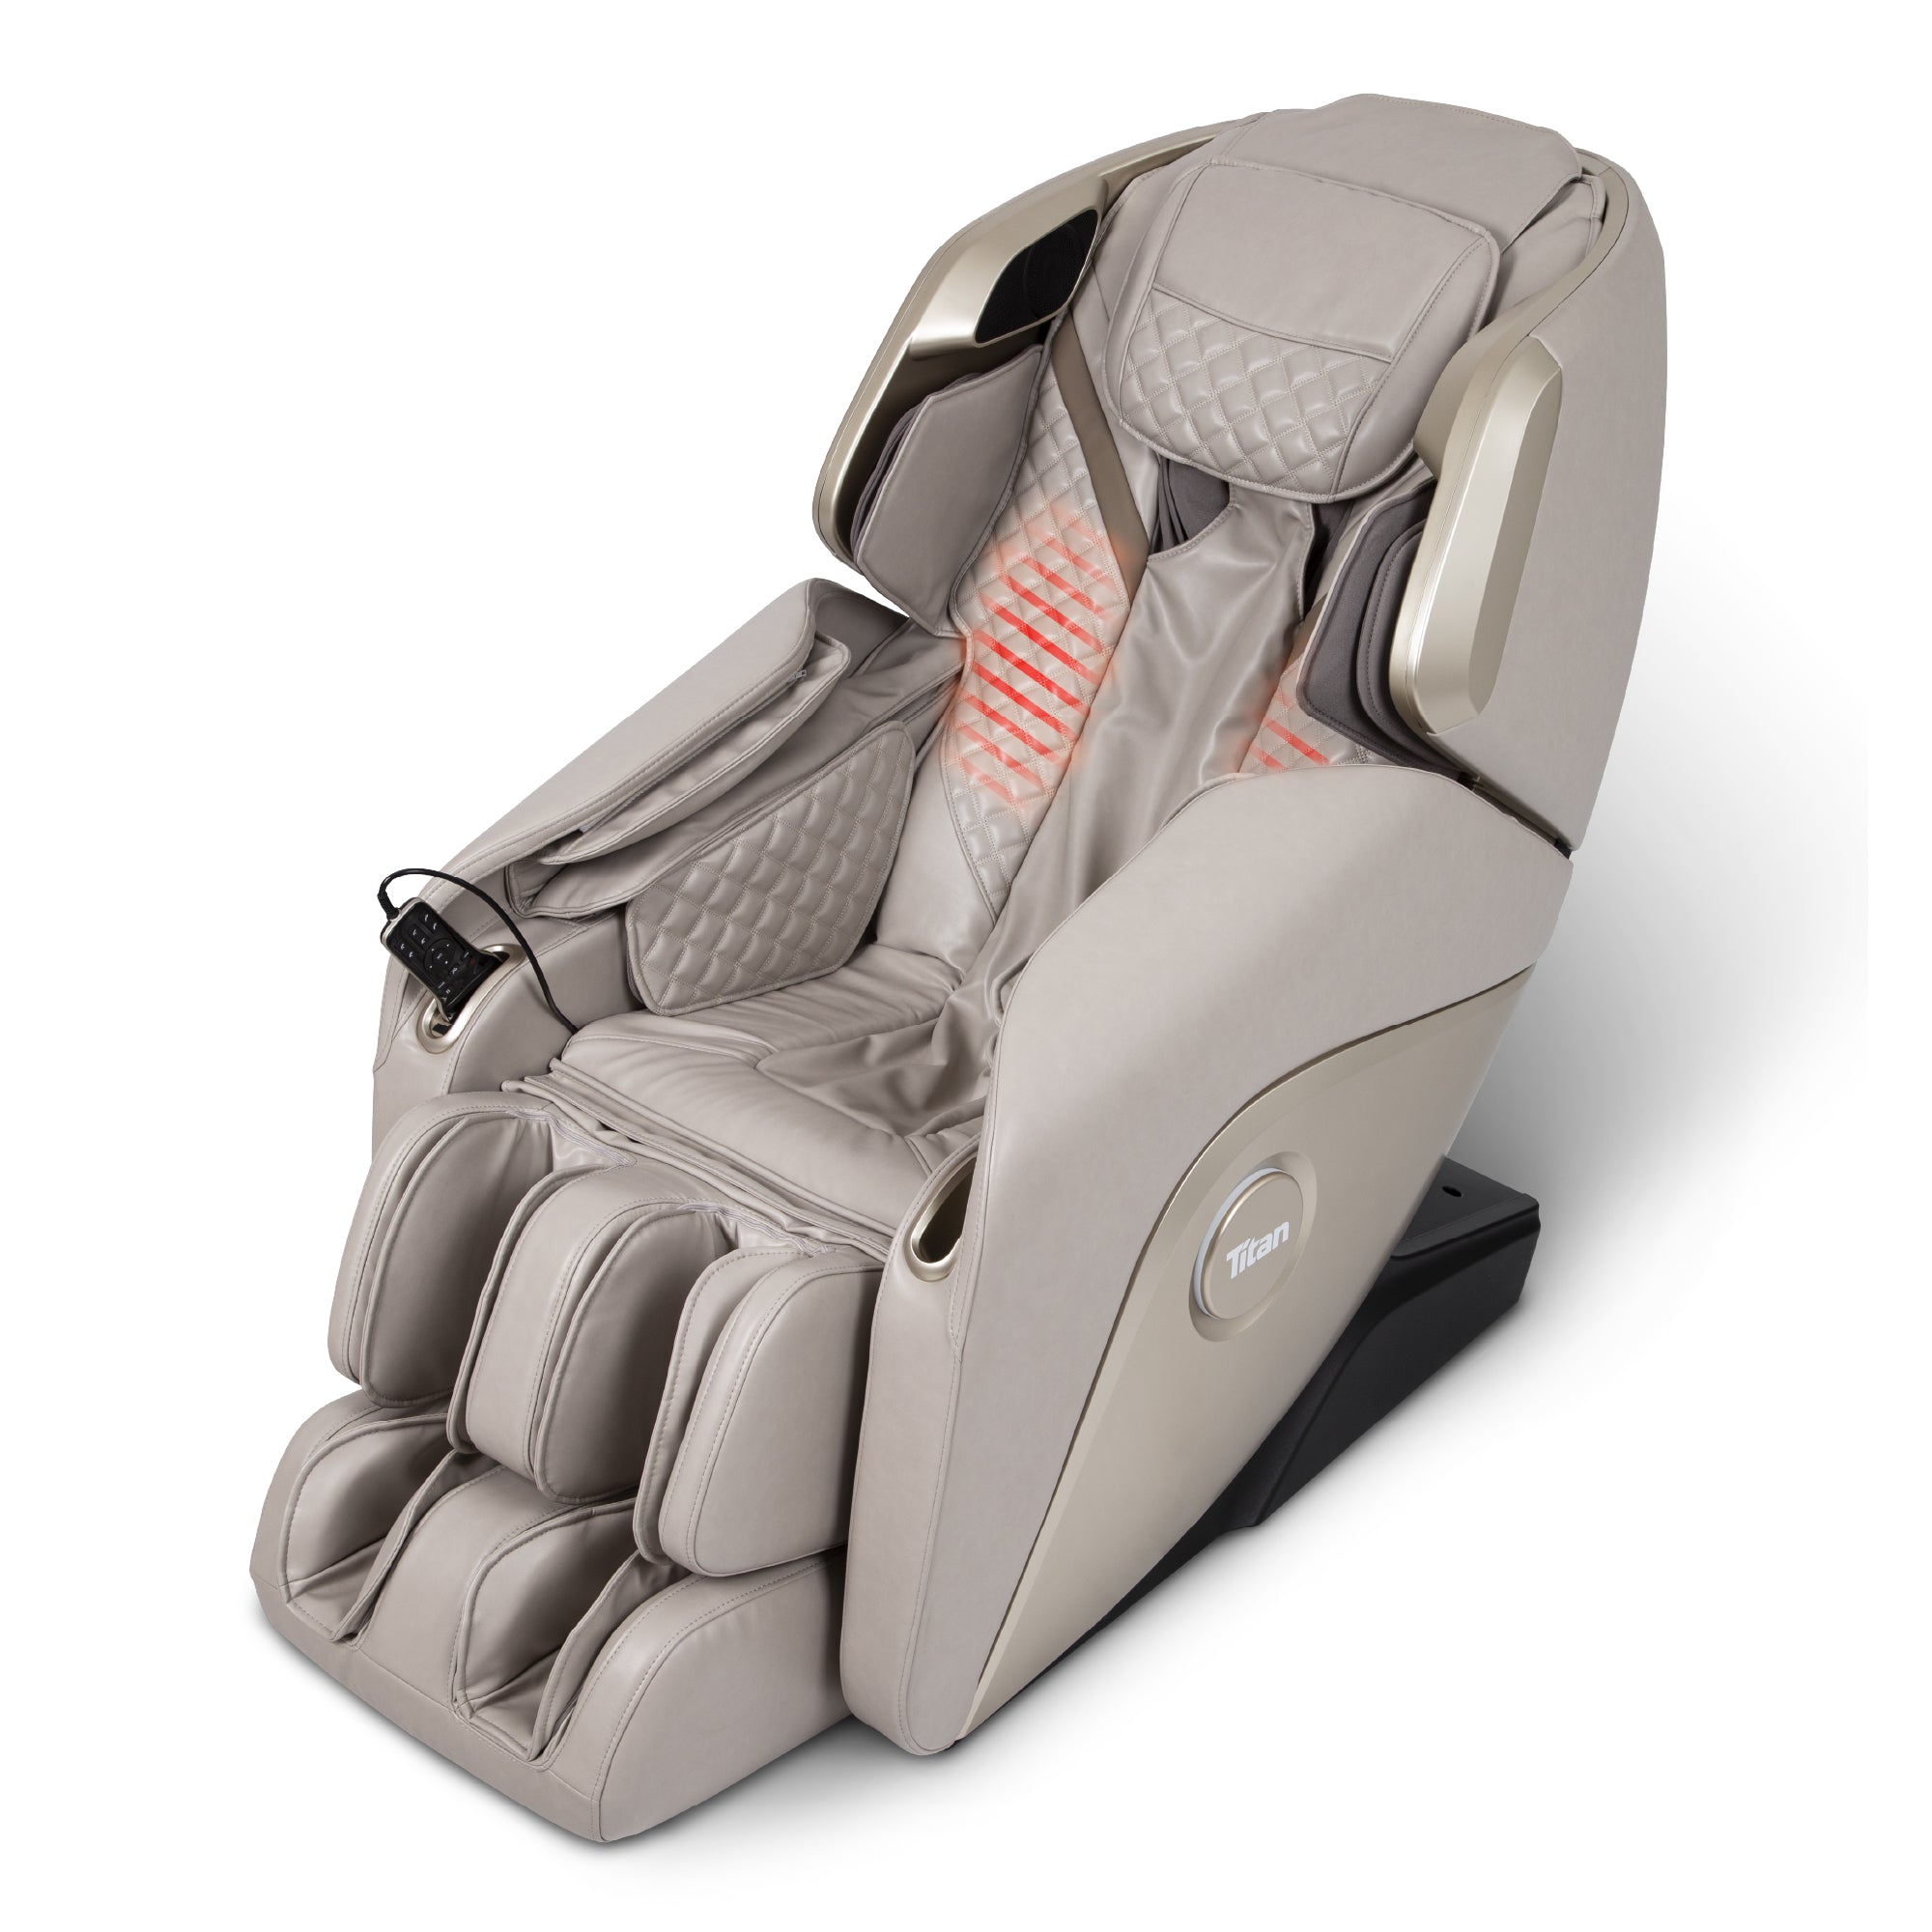 Titan Elite 3D Massage Chair - Heating on Lumbar